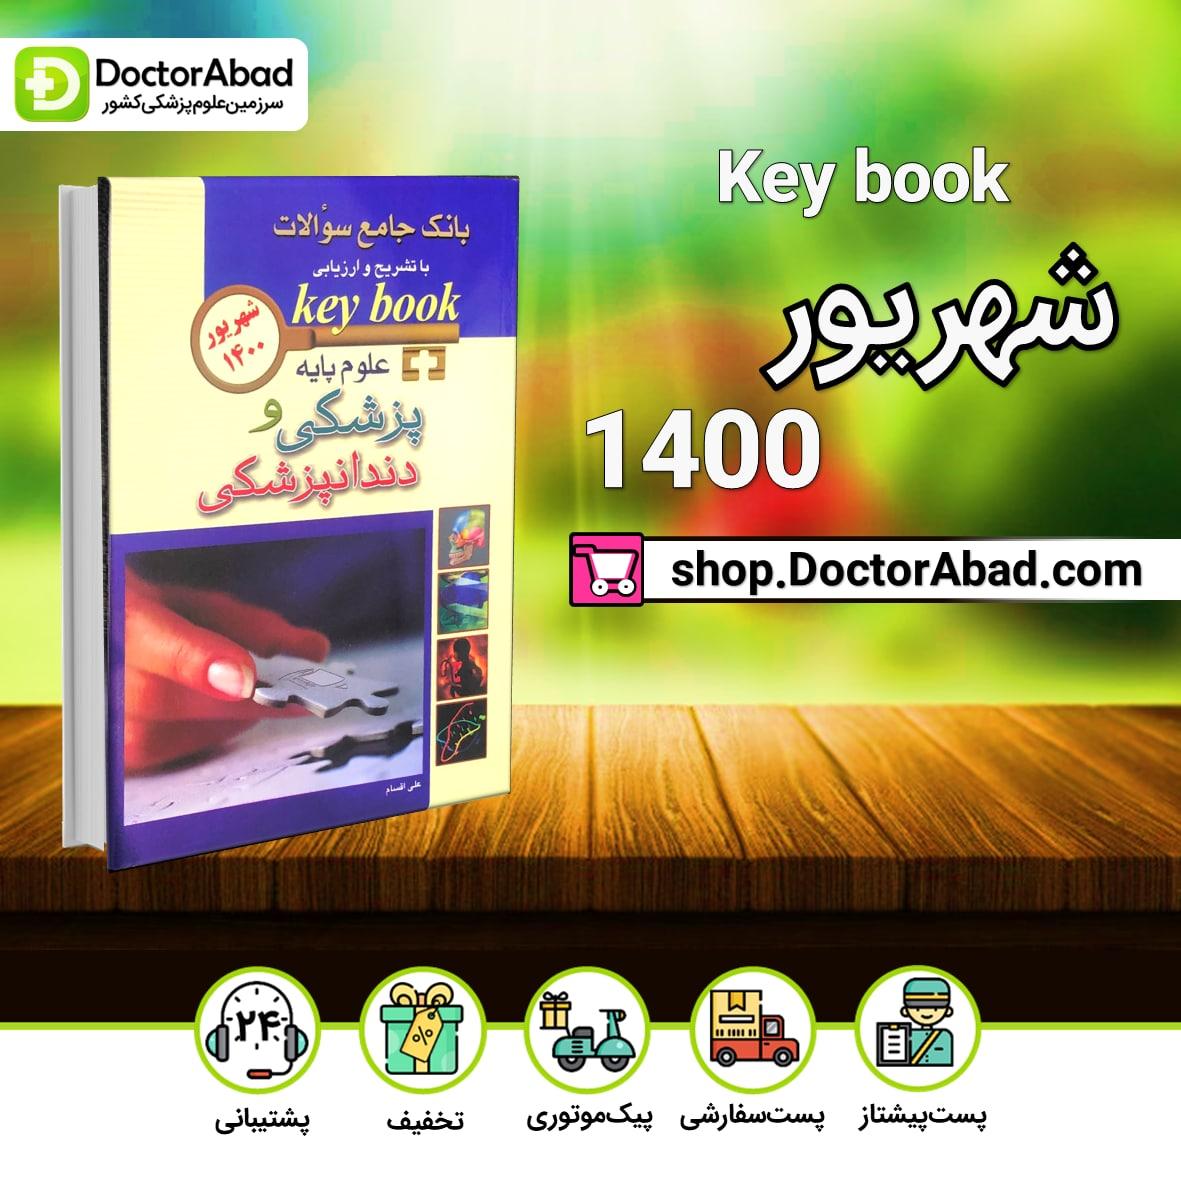 key book بانک جامع سوالات علوم پایه پزشکی و دندانپزشکی شهریور 1400(انتشارات اندیشه رفیع)